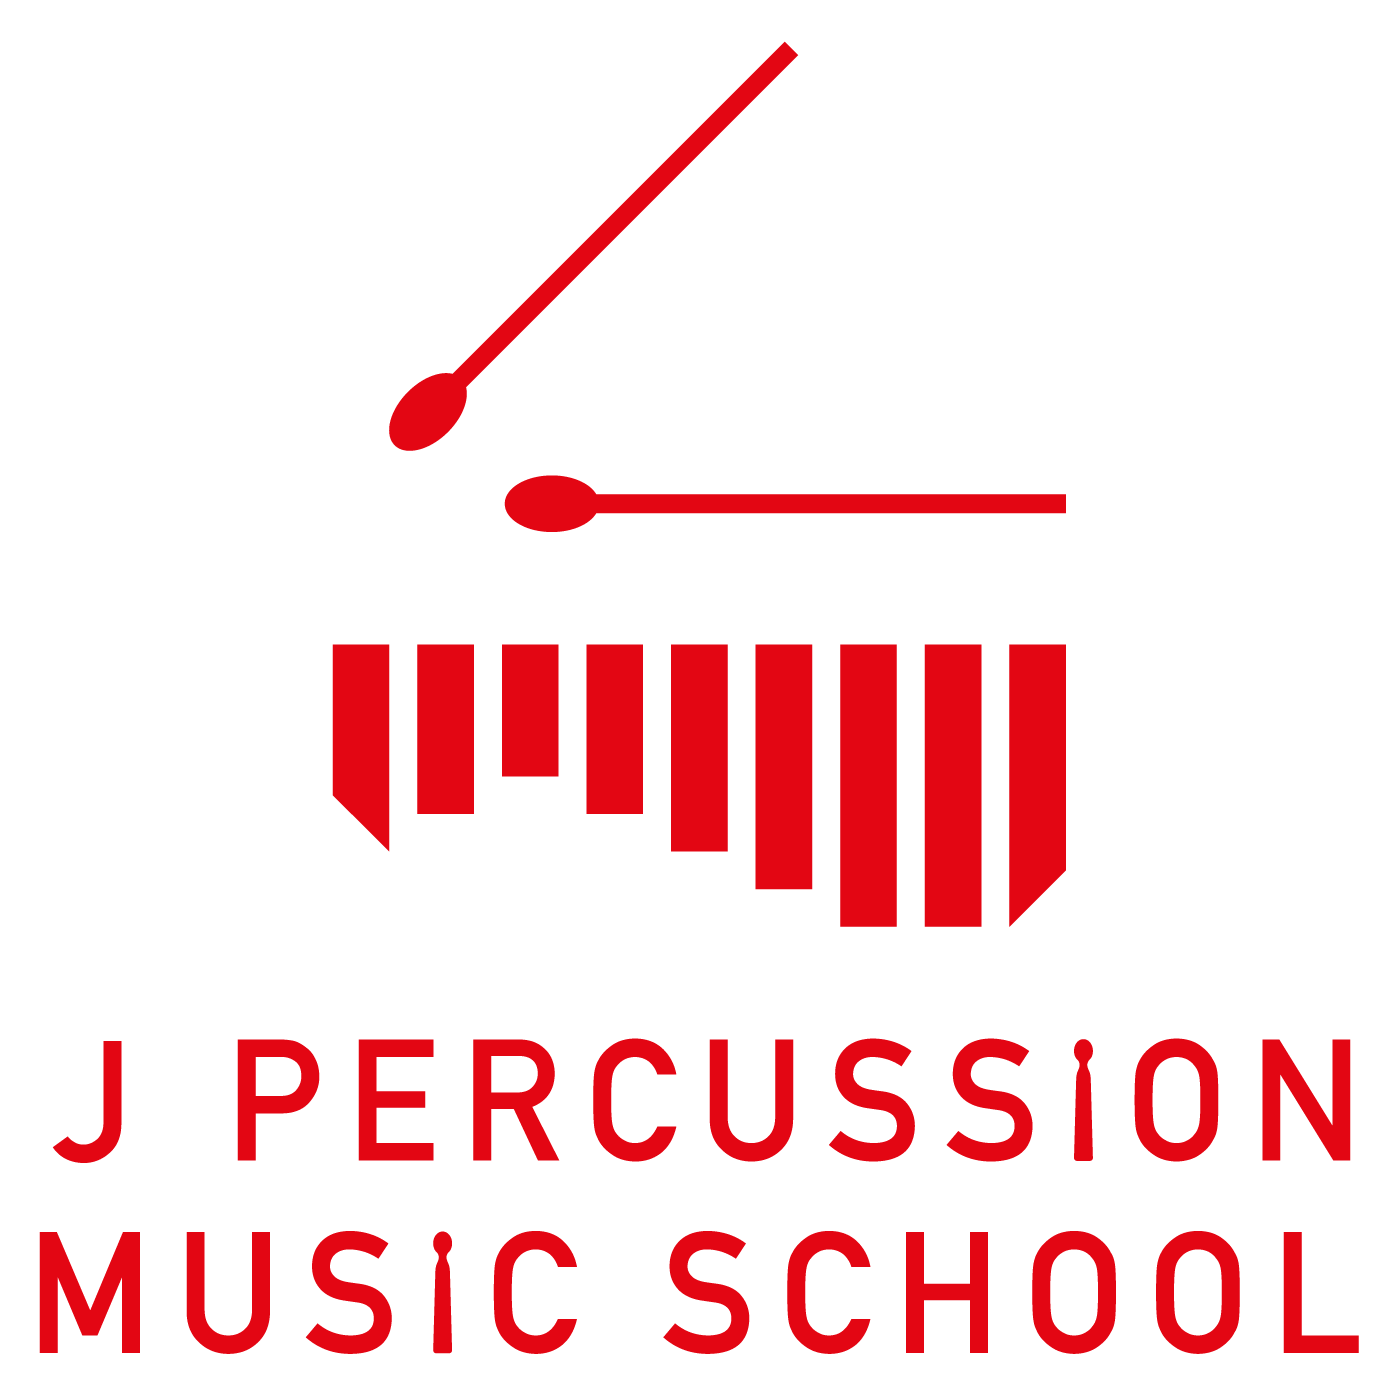 J percussion